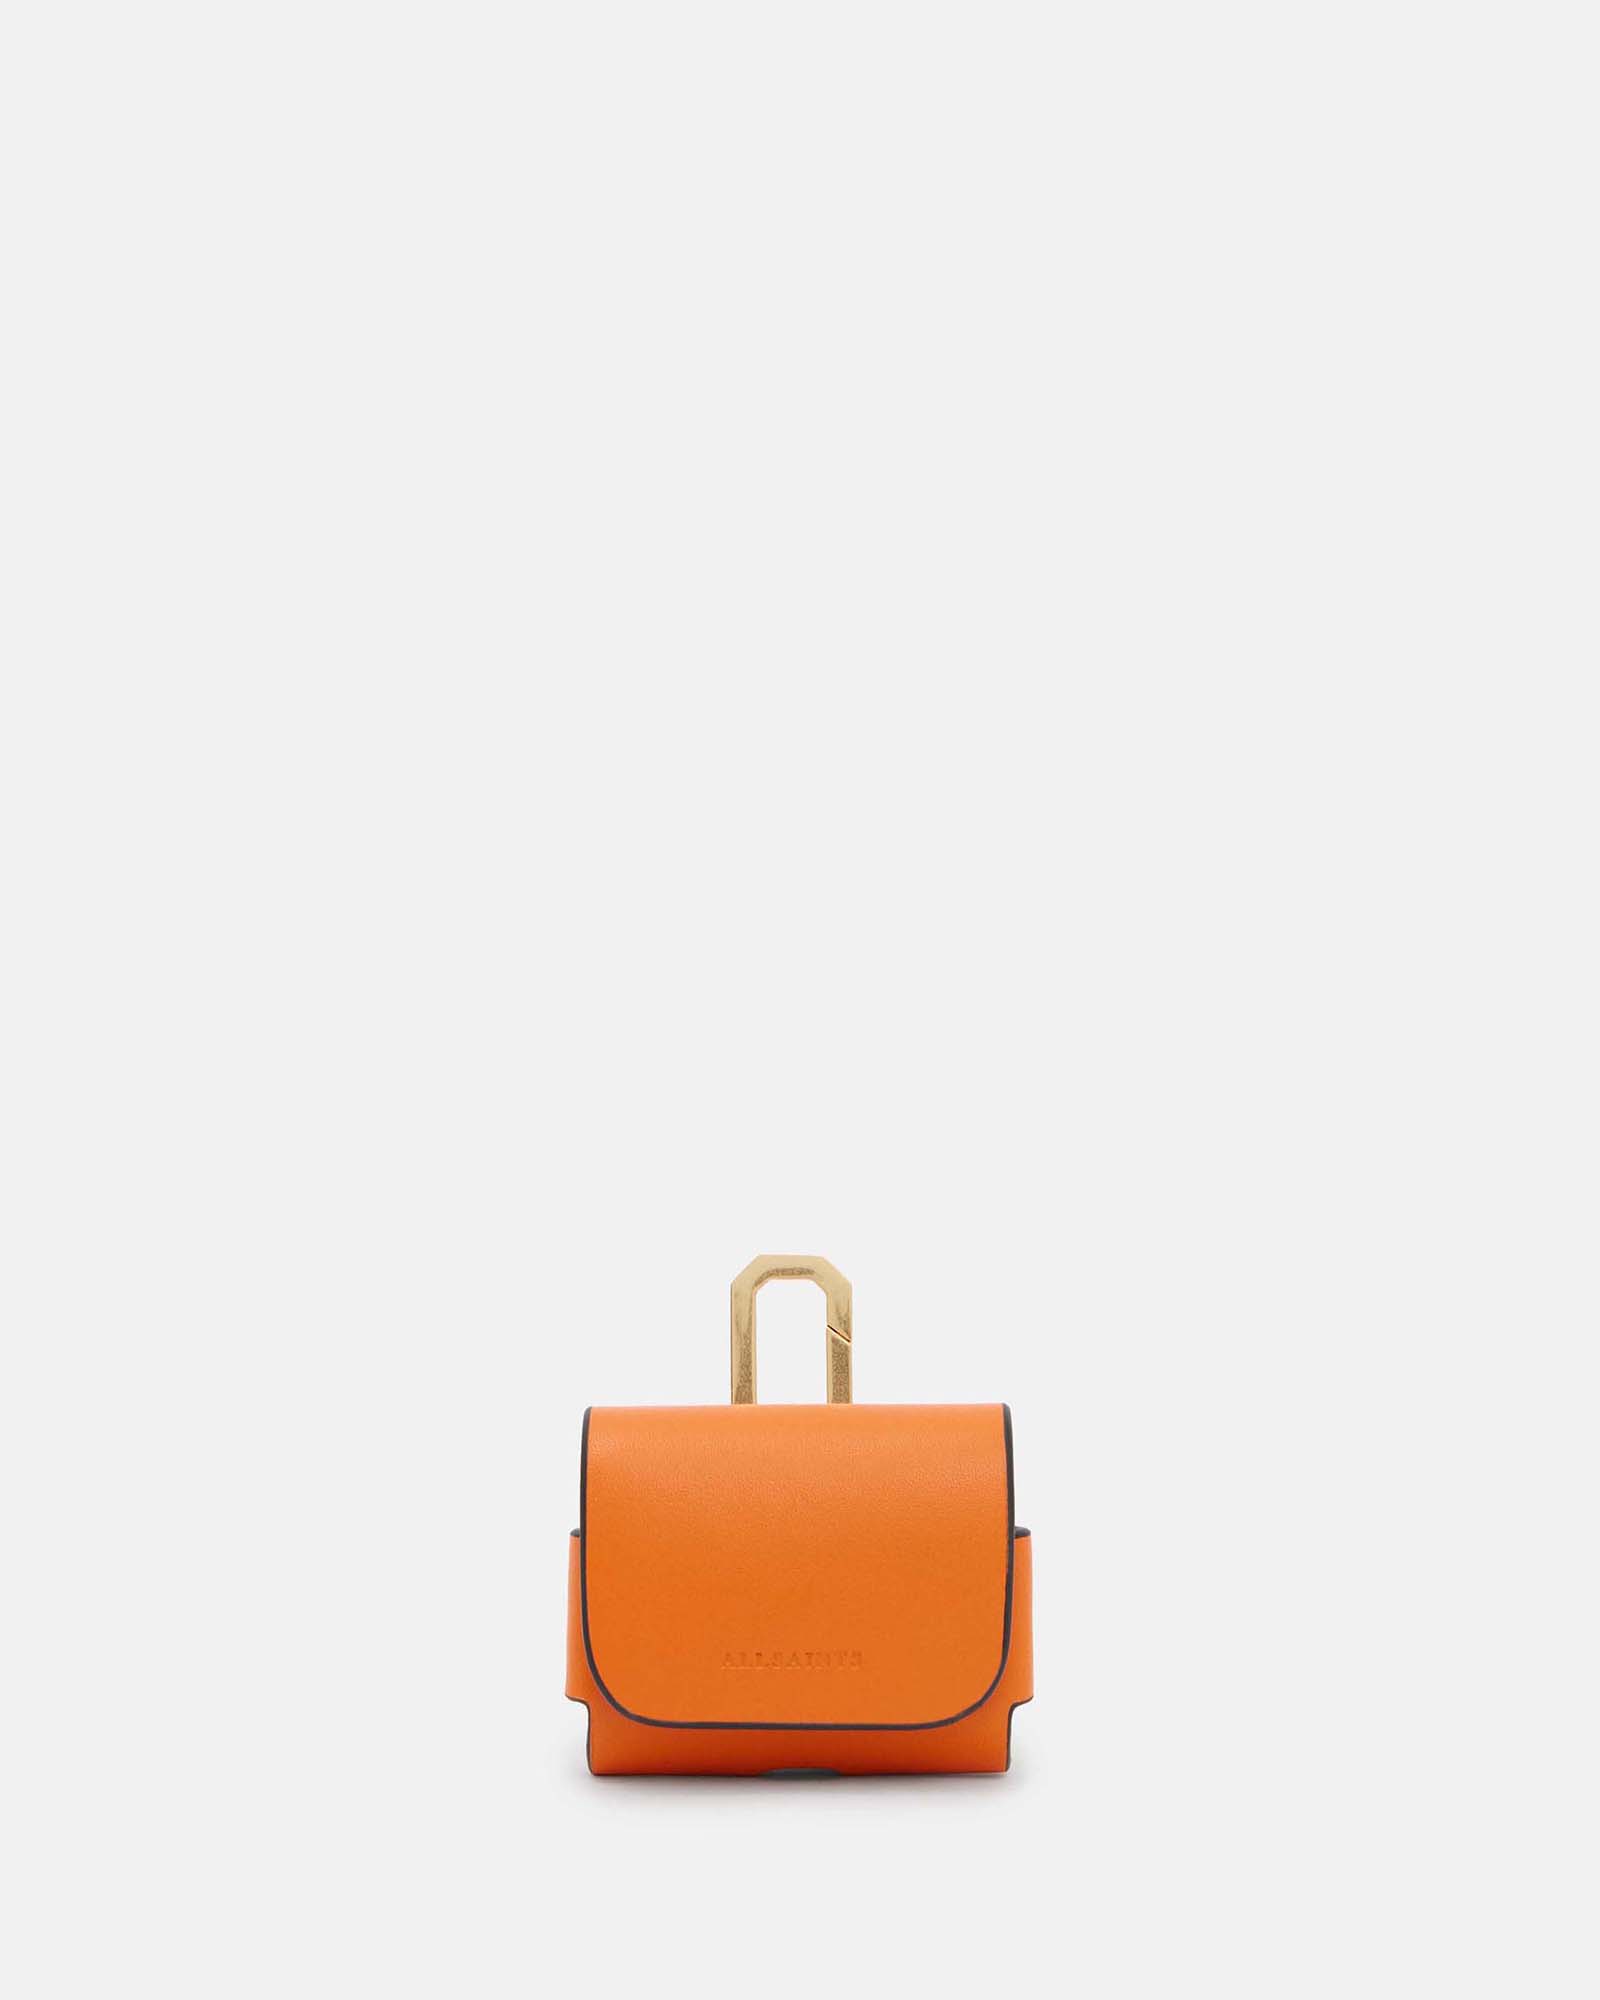 AllSaints Airpod Leather Case